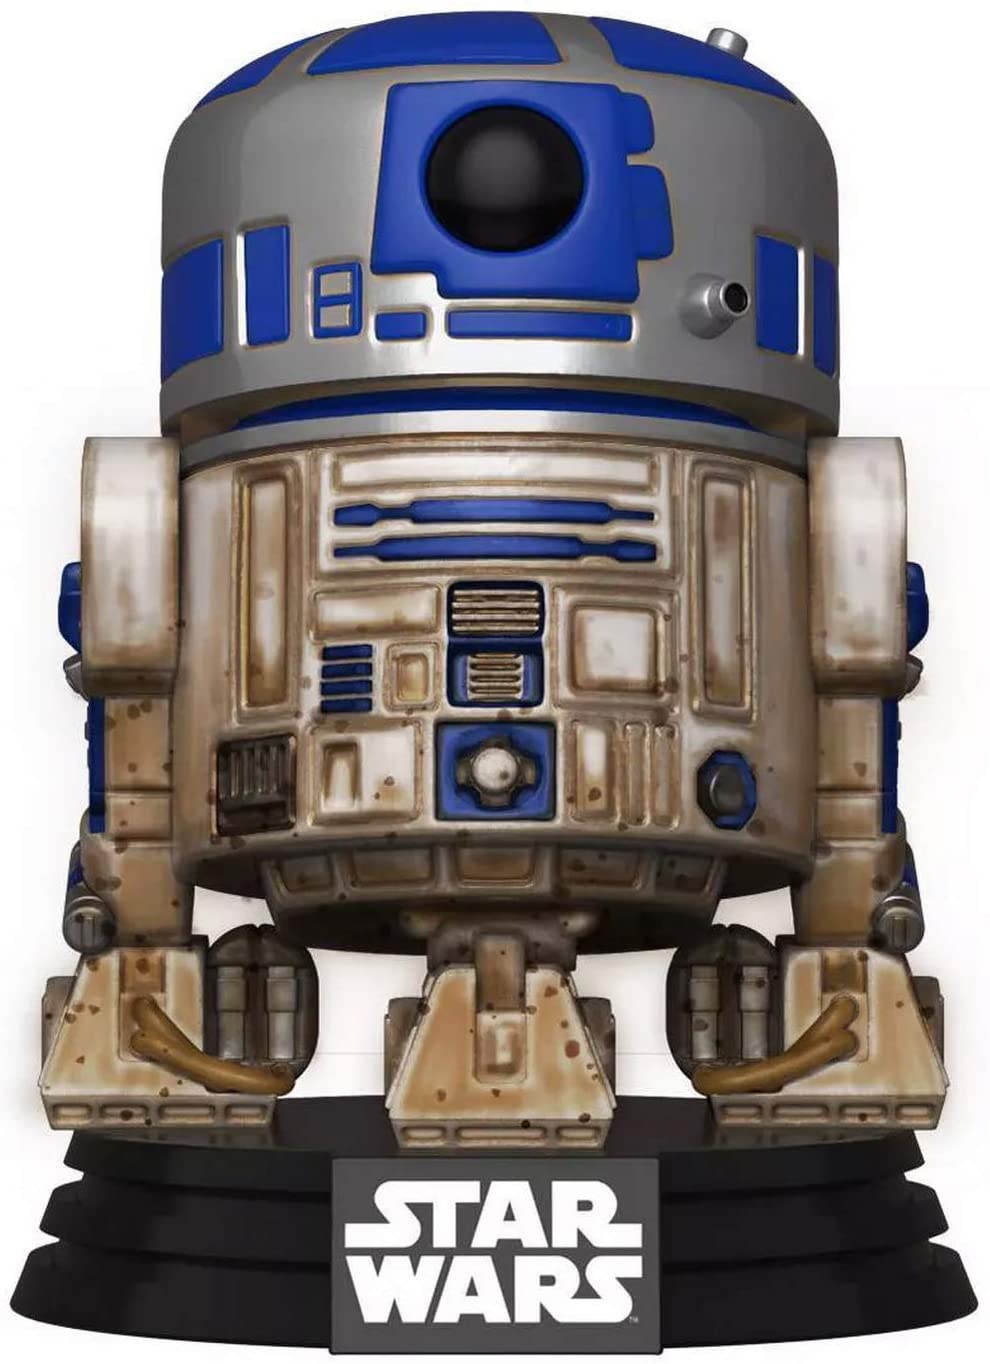 Star Wars ESB R2-D2 exclusive Funko Pop vinyl Figure 2020